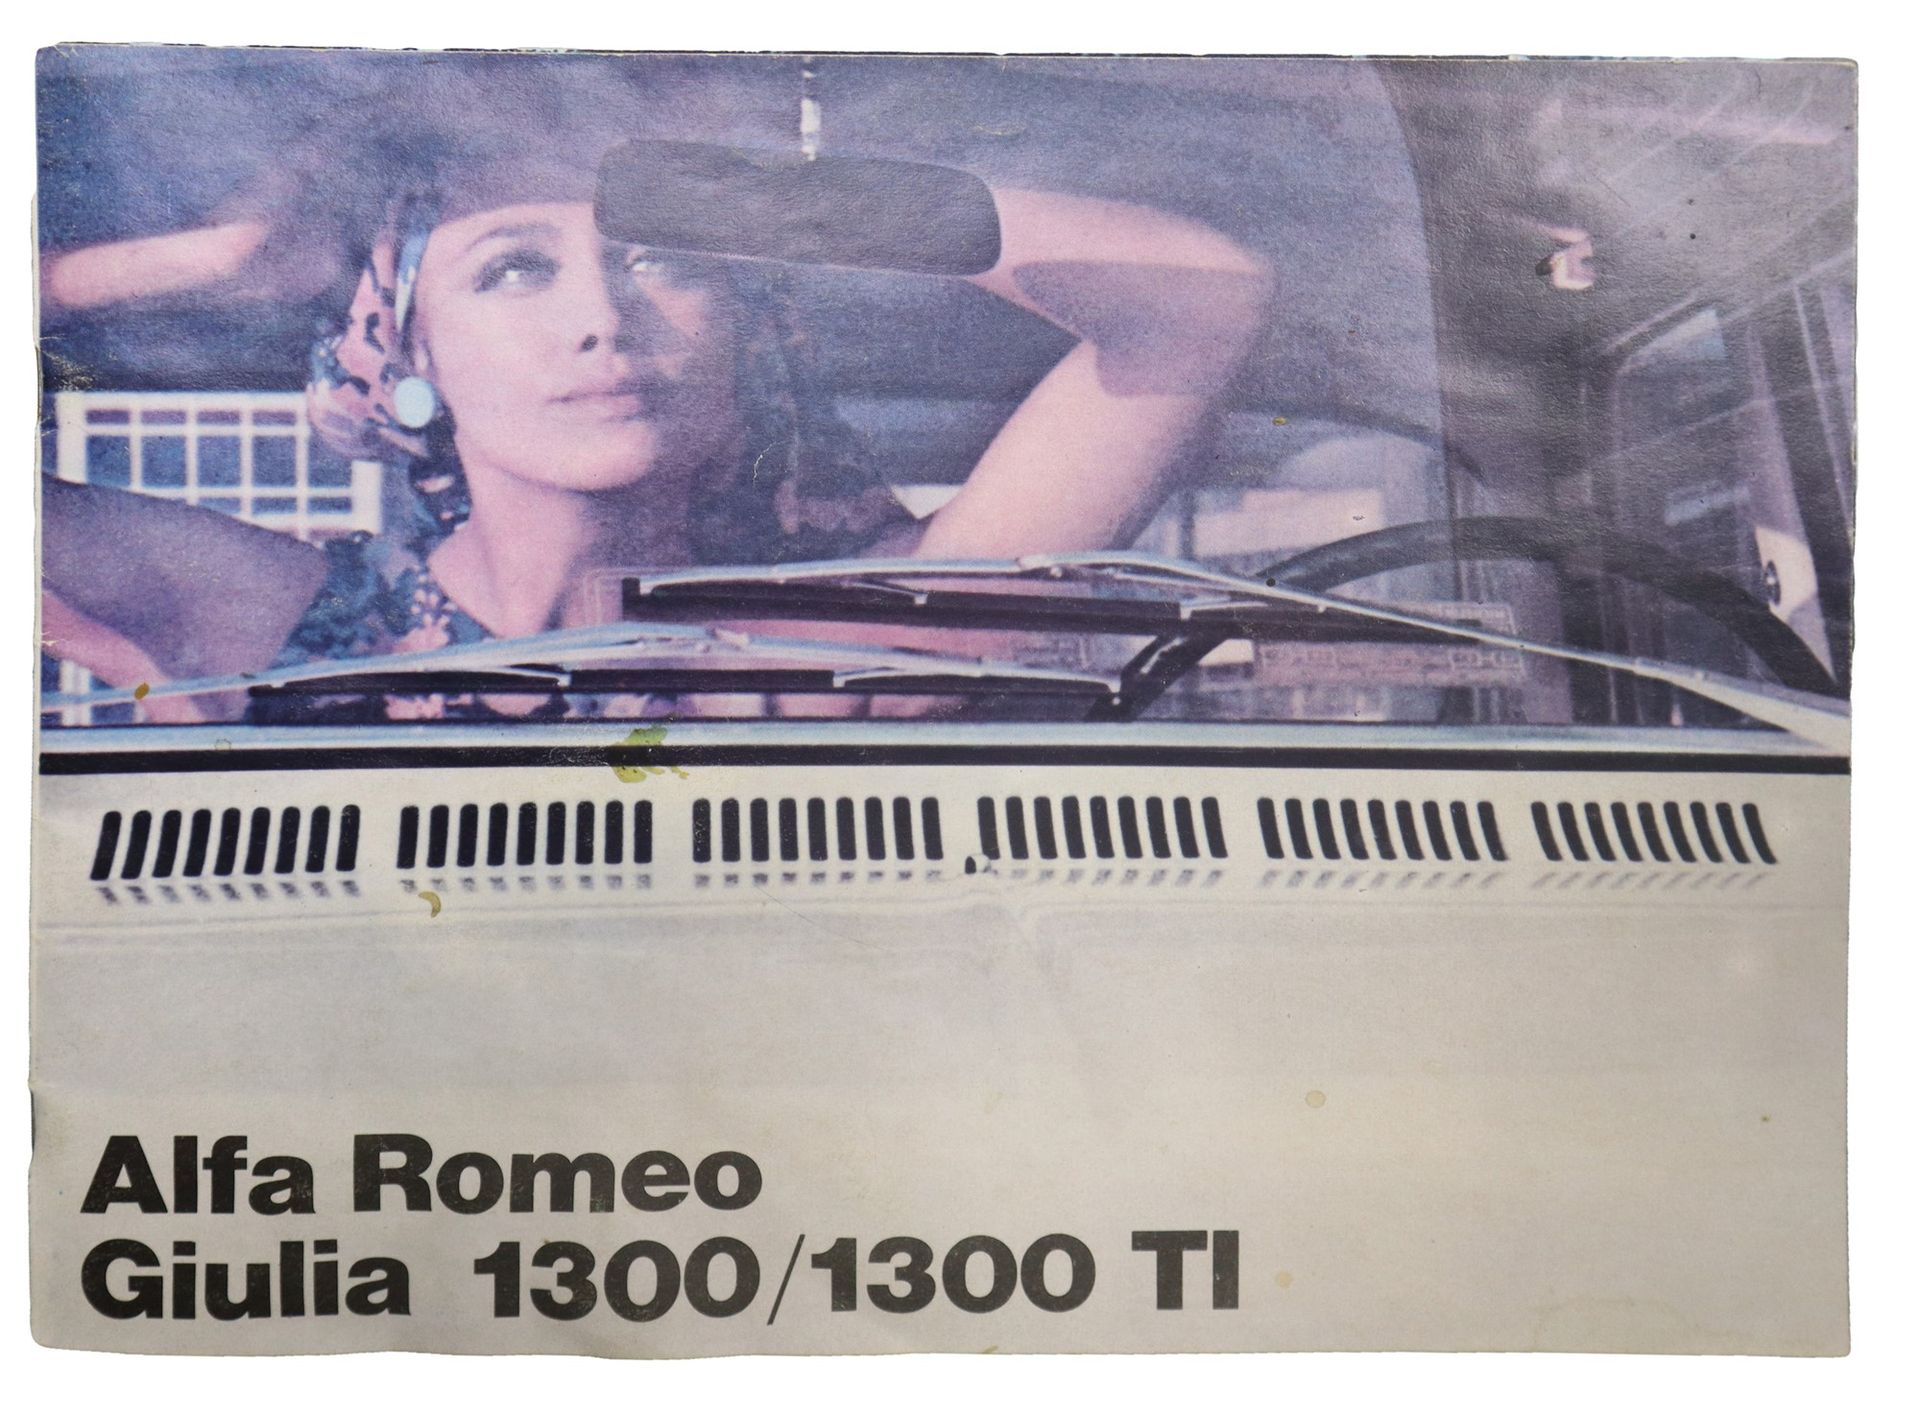 Null 阿尔法-罗密欧Giulia 1300/1300 TI折叠式广告传单，1969年，22厘米×28厘米，状态极佳，意大利版本，封面有小斑点。